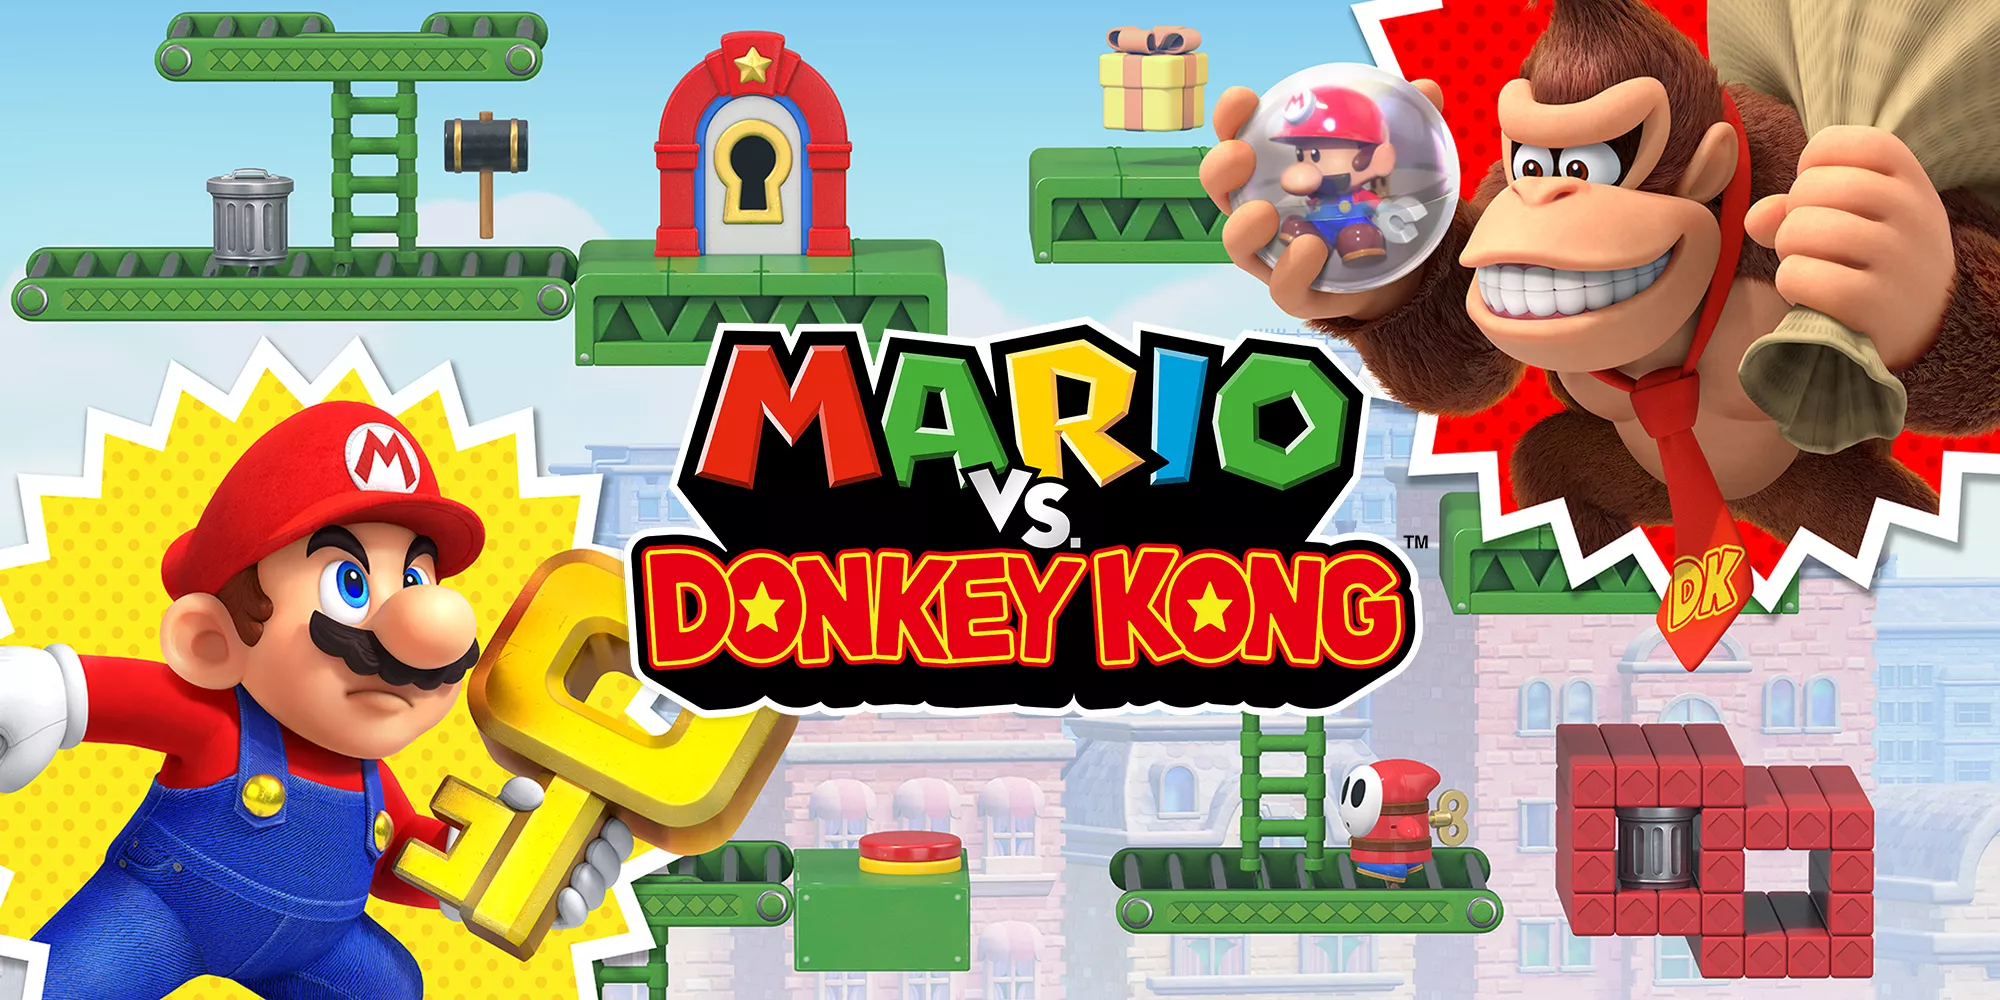 Demo zu Mario vs. Donkey Kong ab sofort verfügbar Heropic